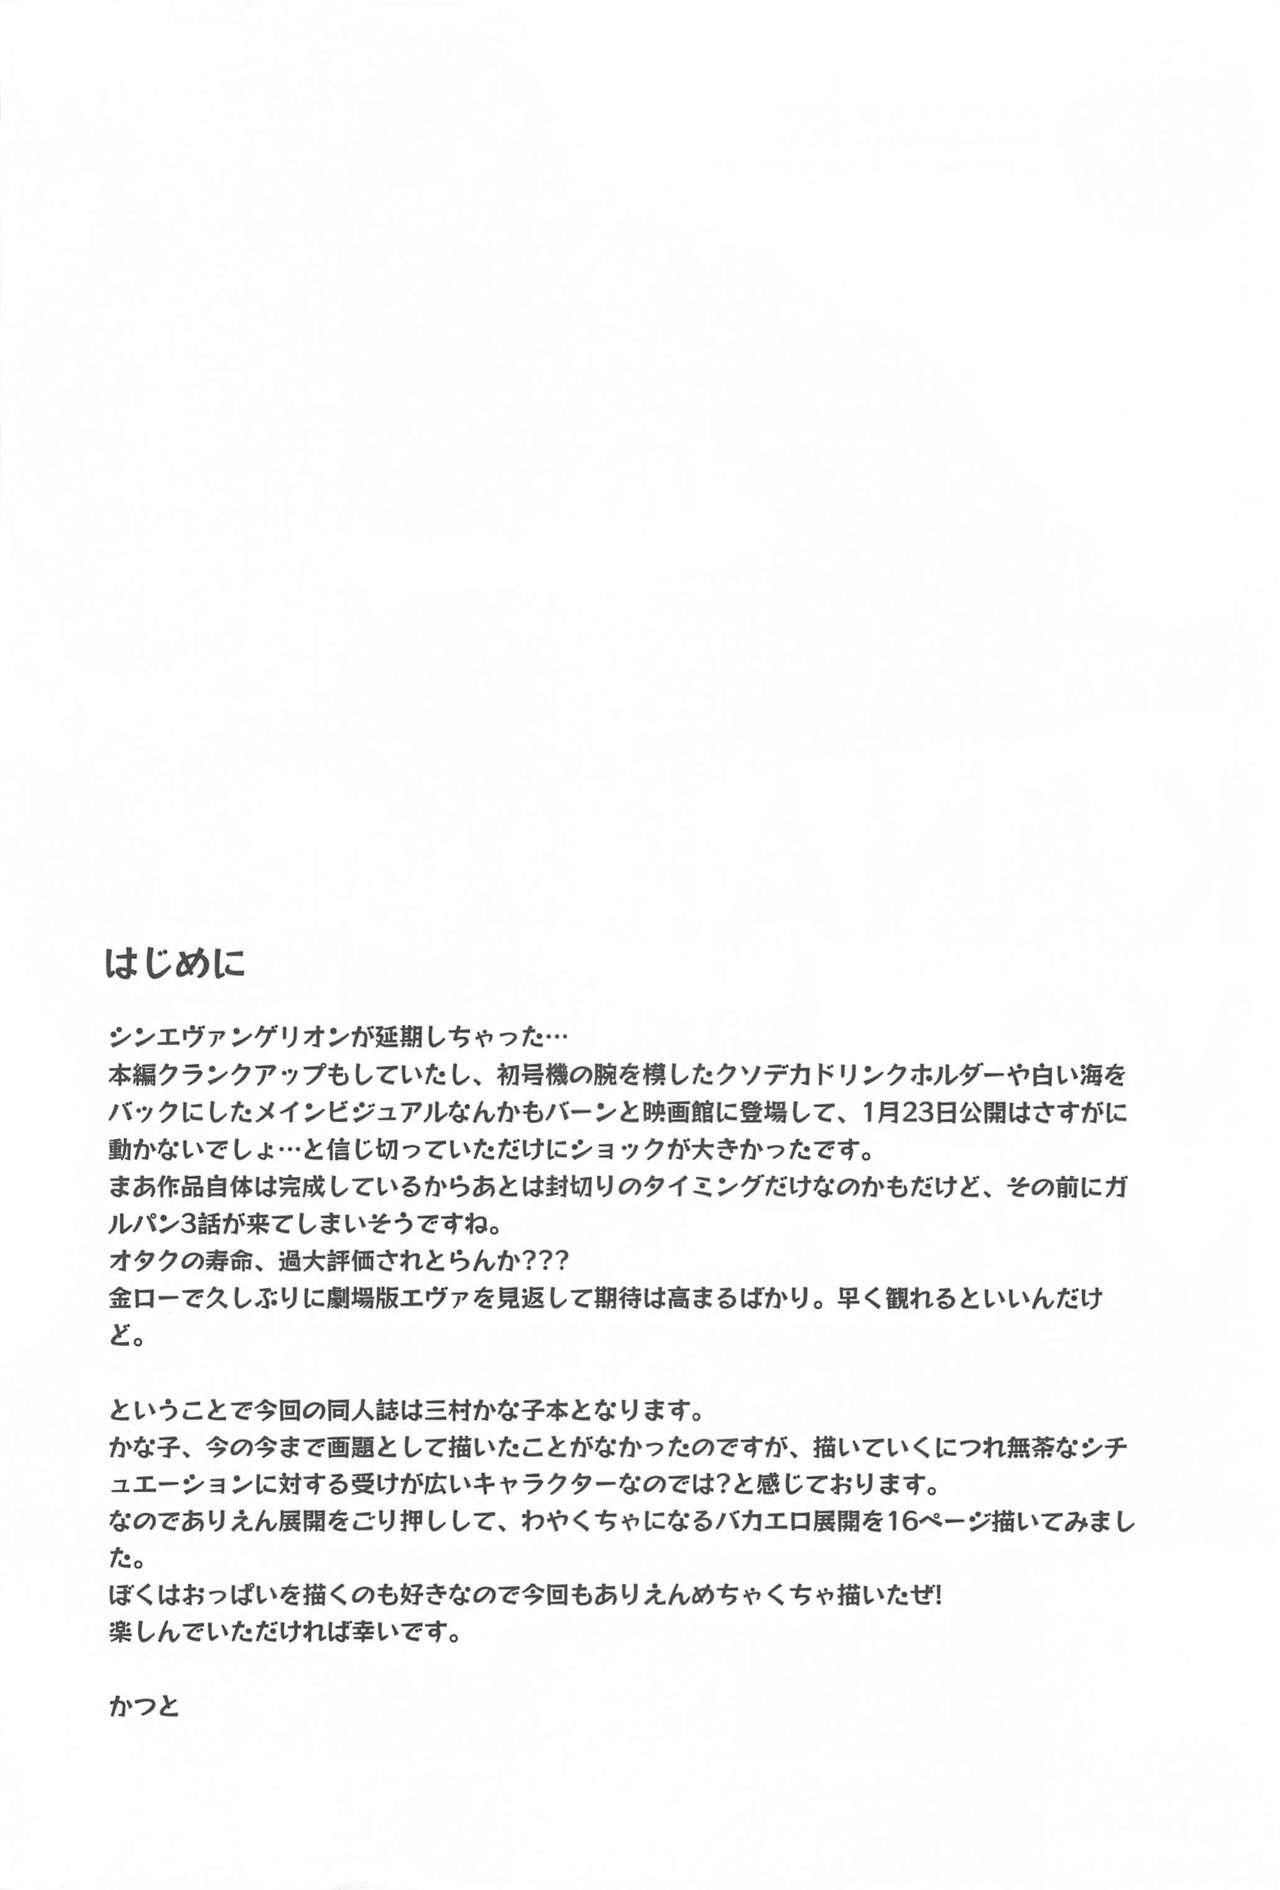 Exhib Kanako vs Meka Kanako - The idolmaster Family - Page 3